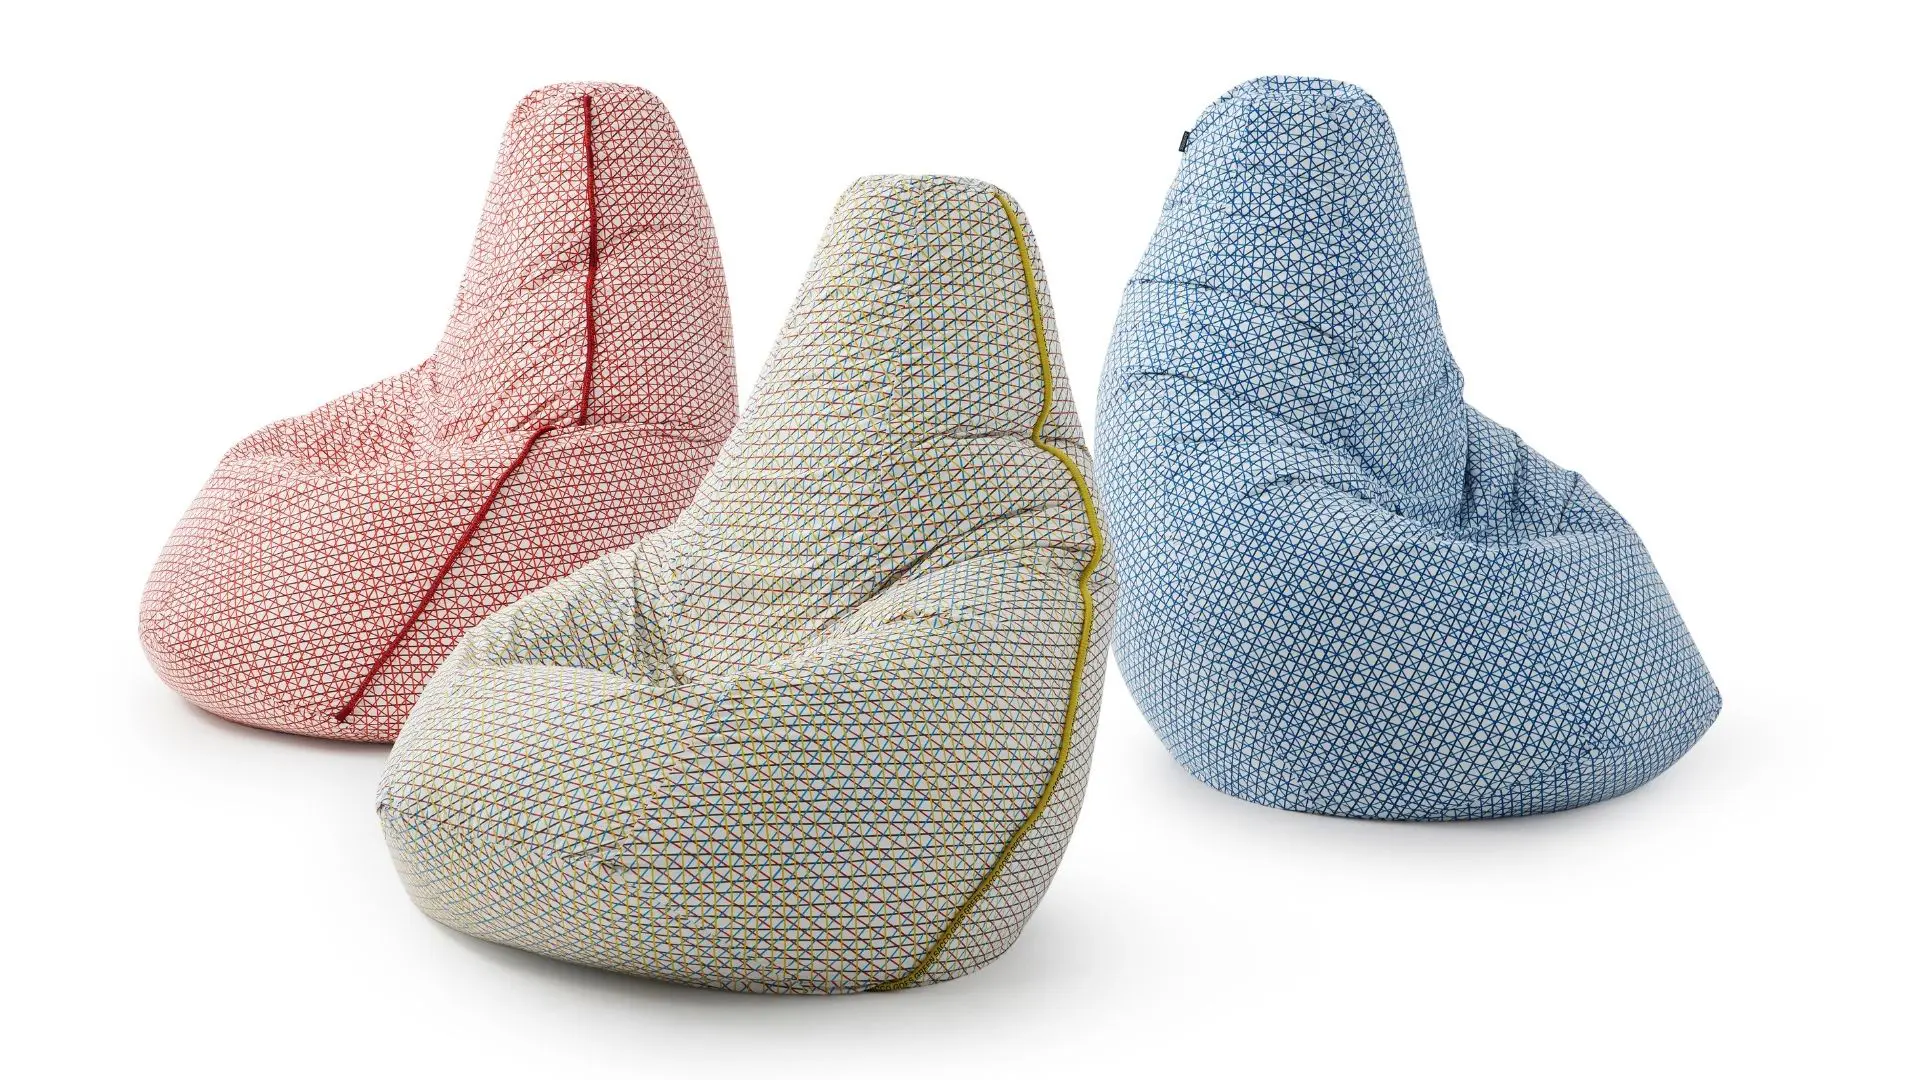 Cushion design _ Pillow potential